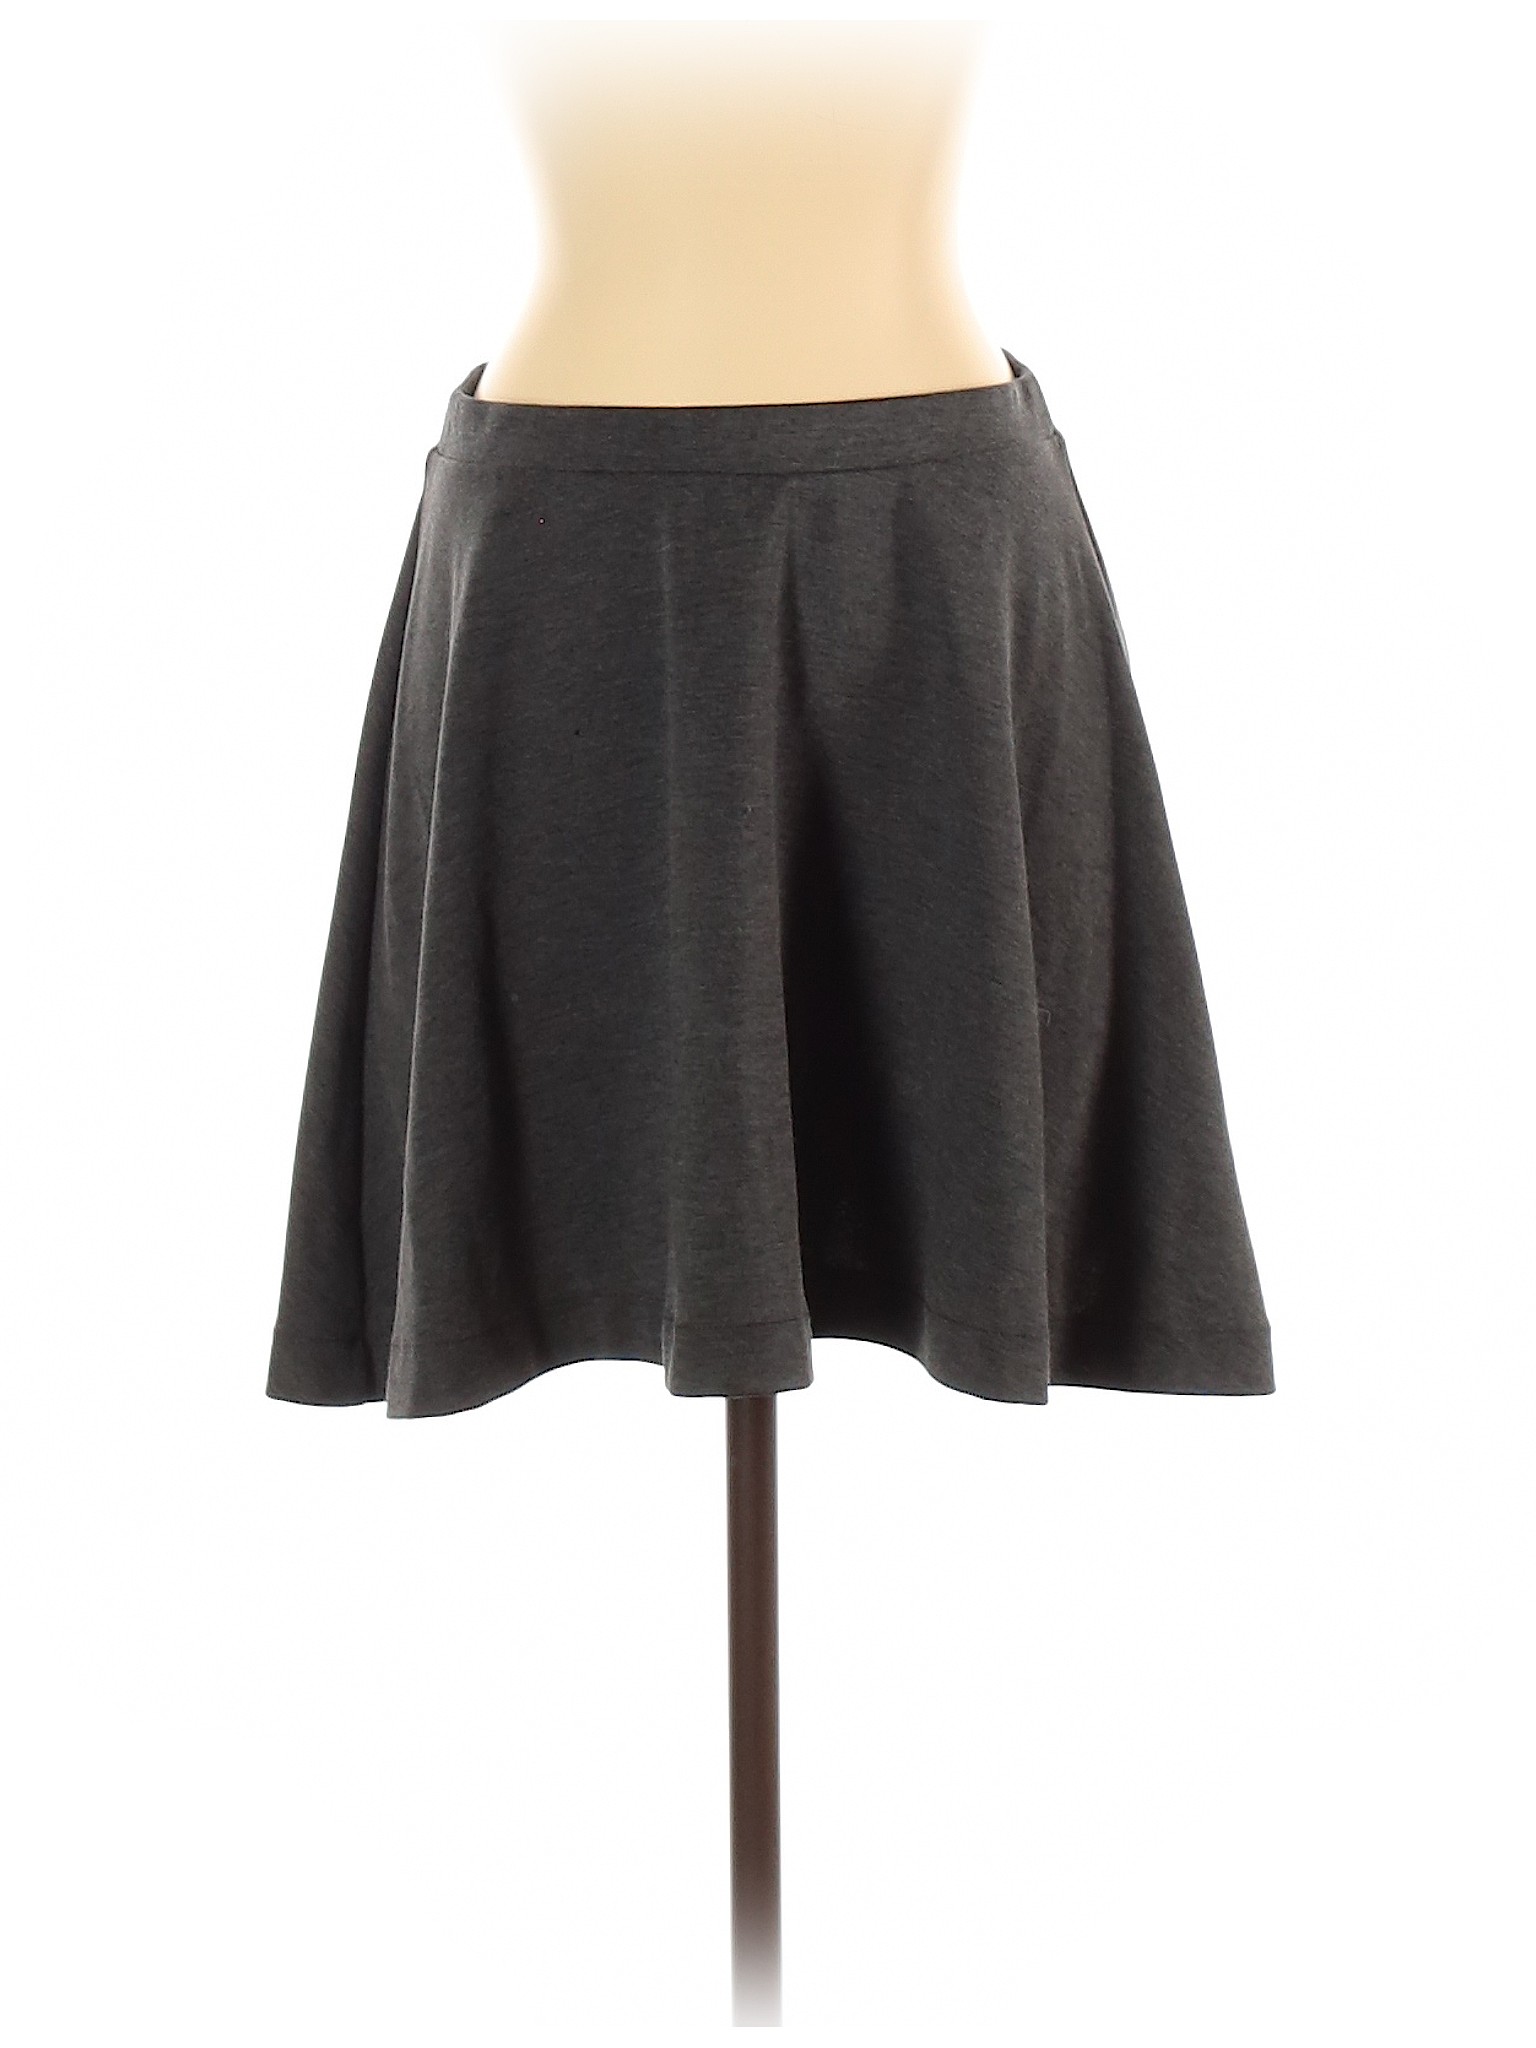 Old Navy Women Black Casual Skirt S Petites | eBay